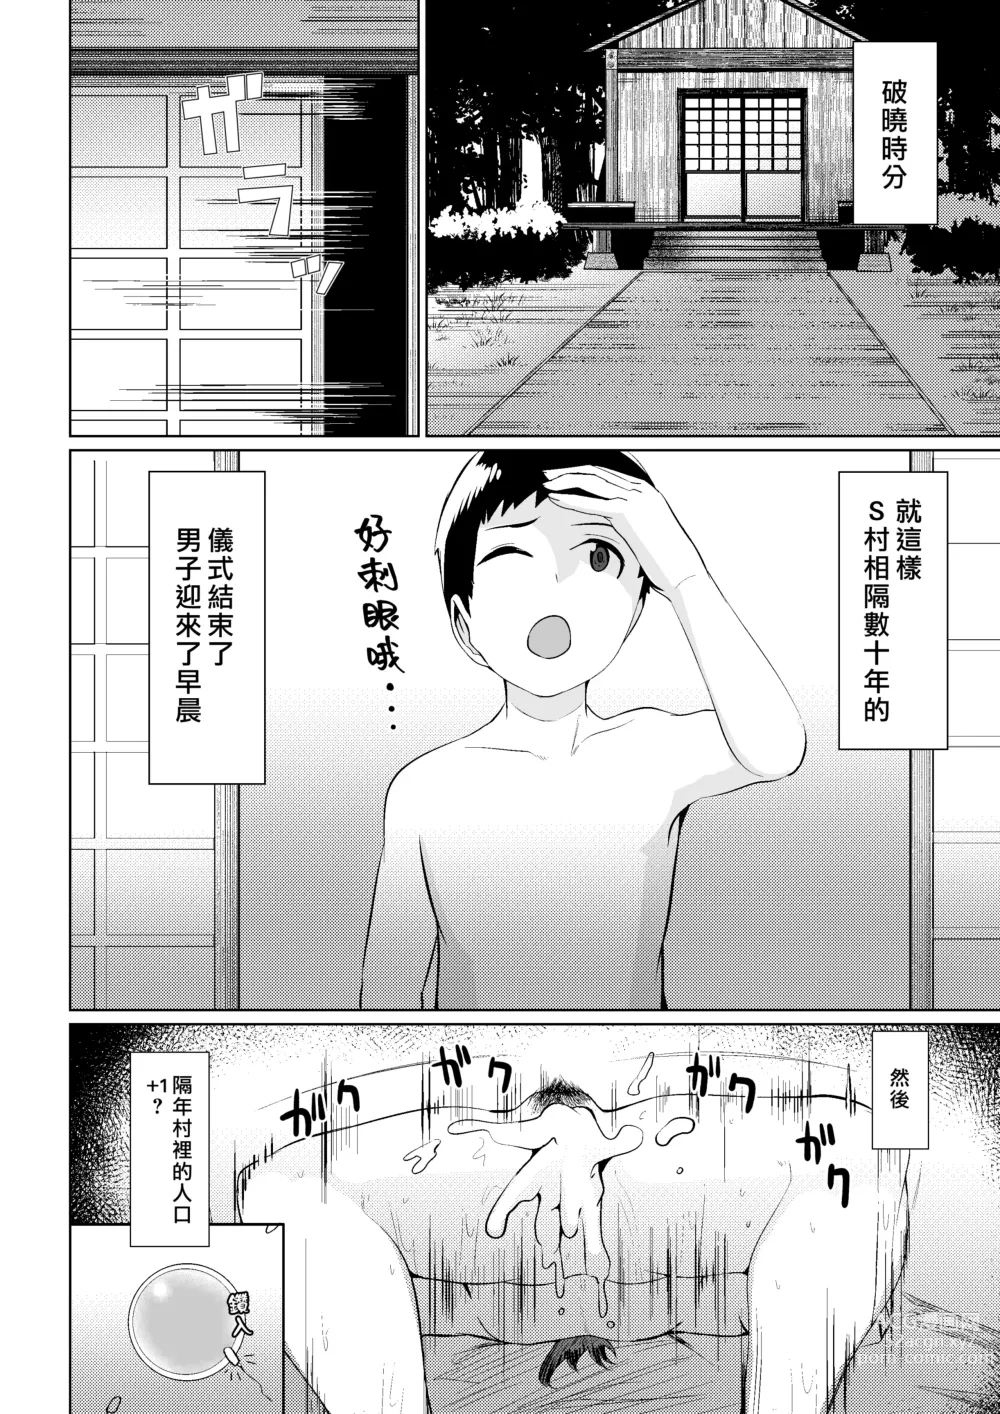 Page 24 of doujinshi 村中戒律不得違背